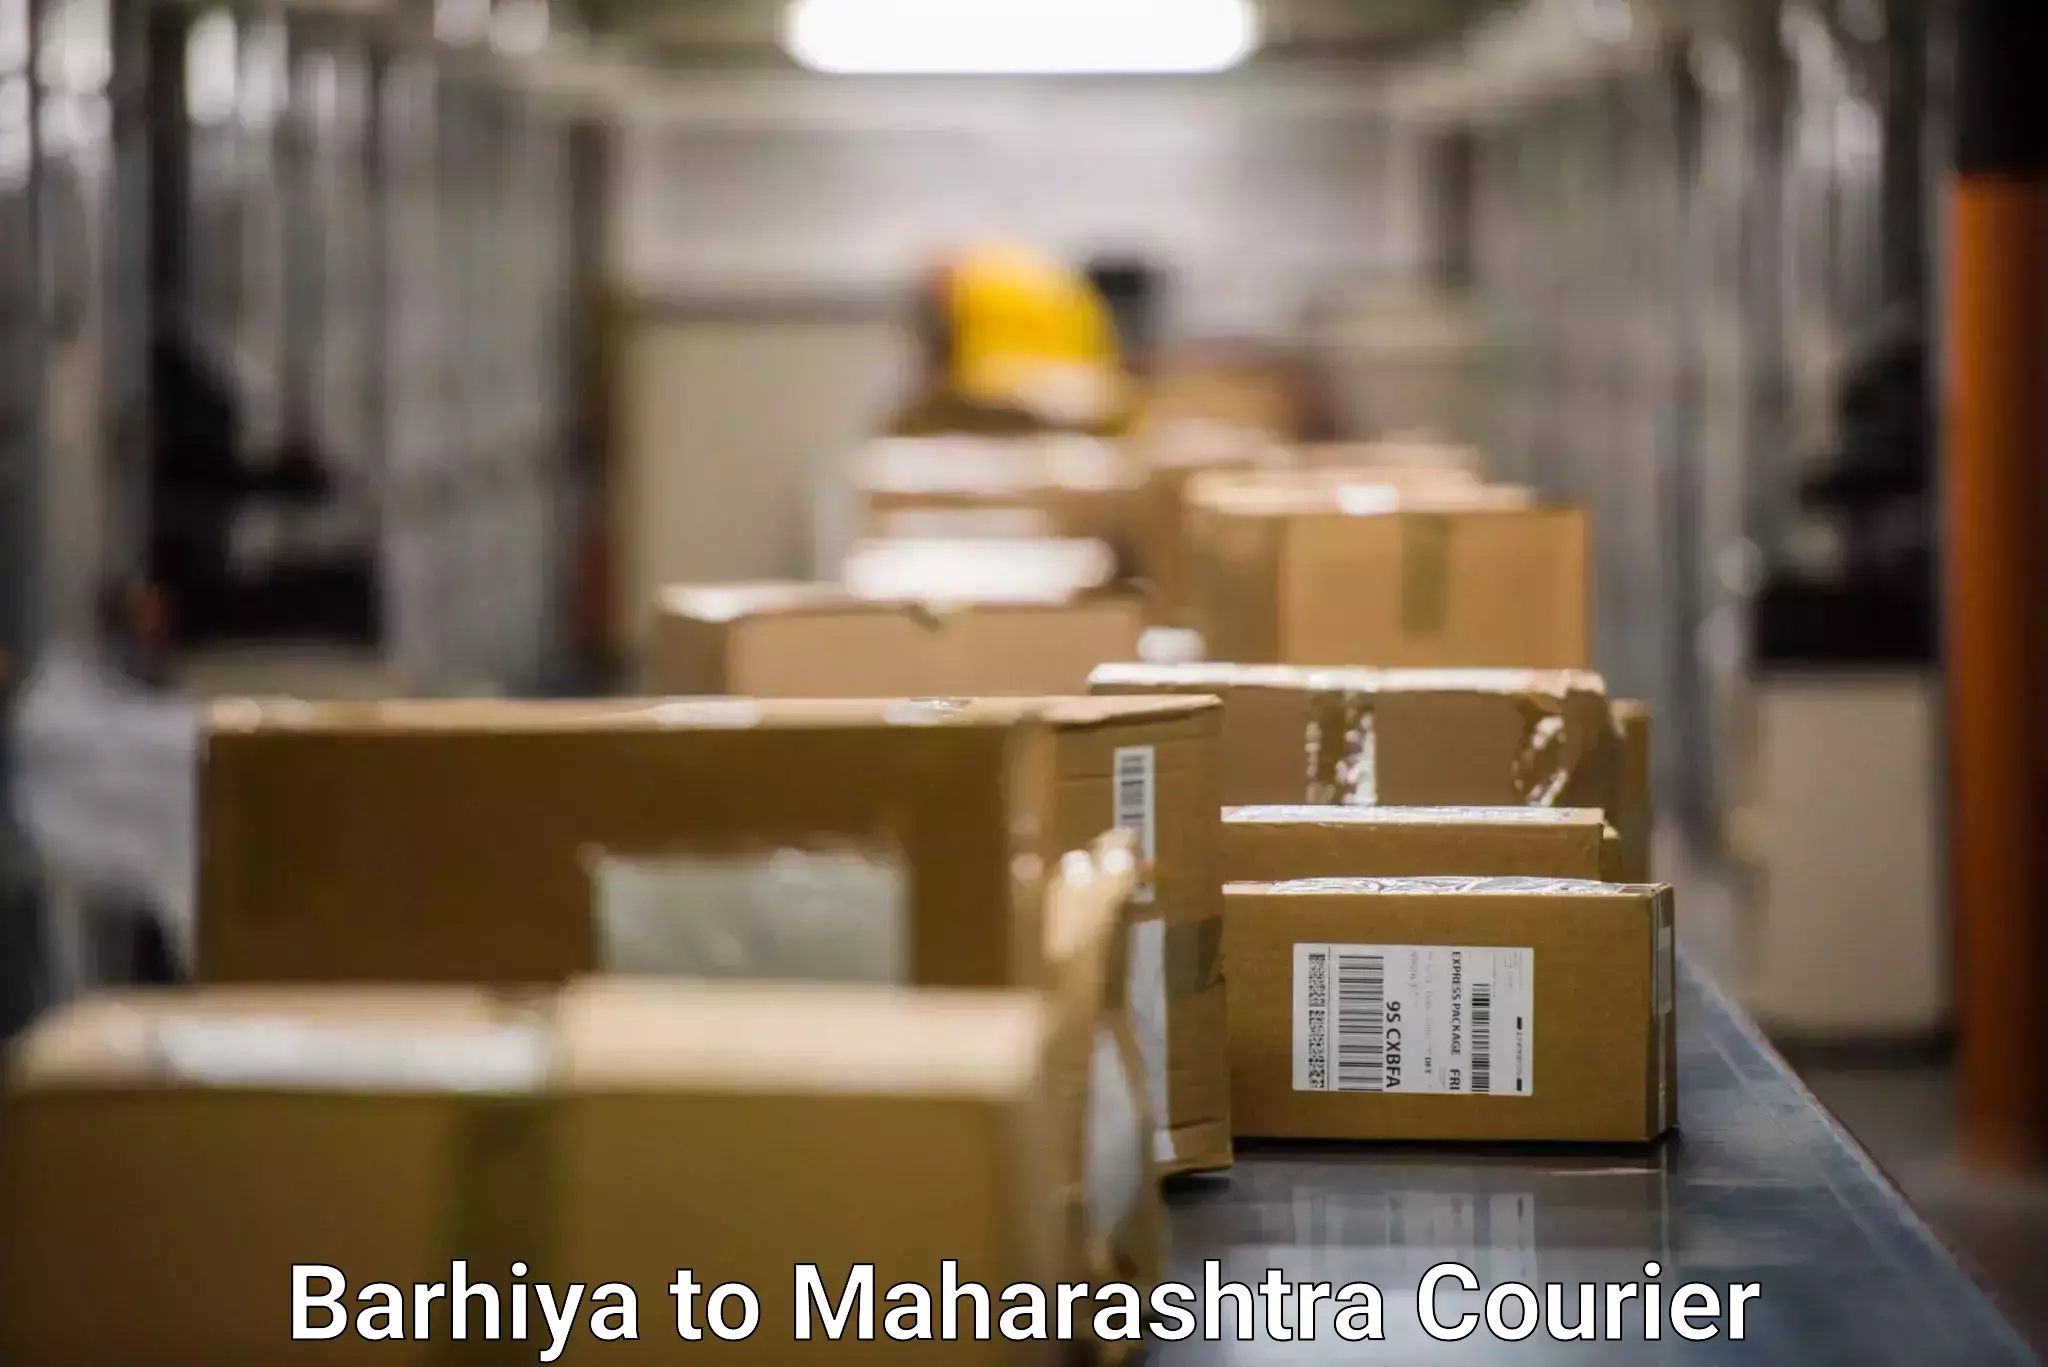 Courier service comparison Barhiya to Gadchandur